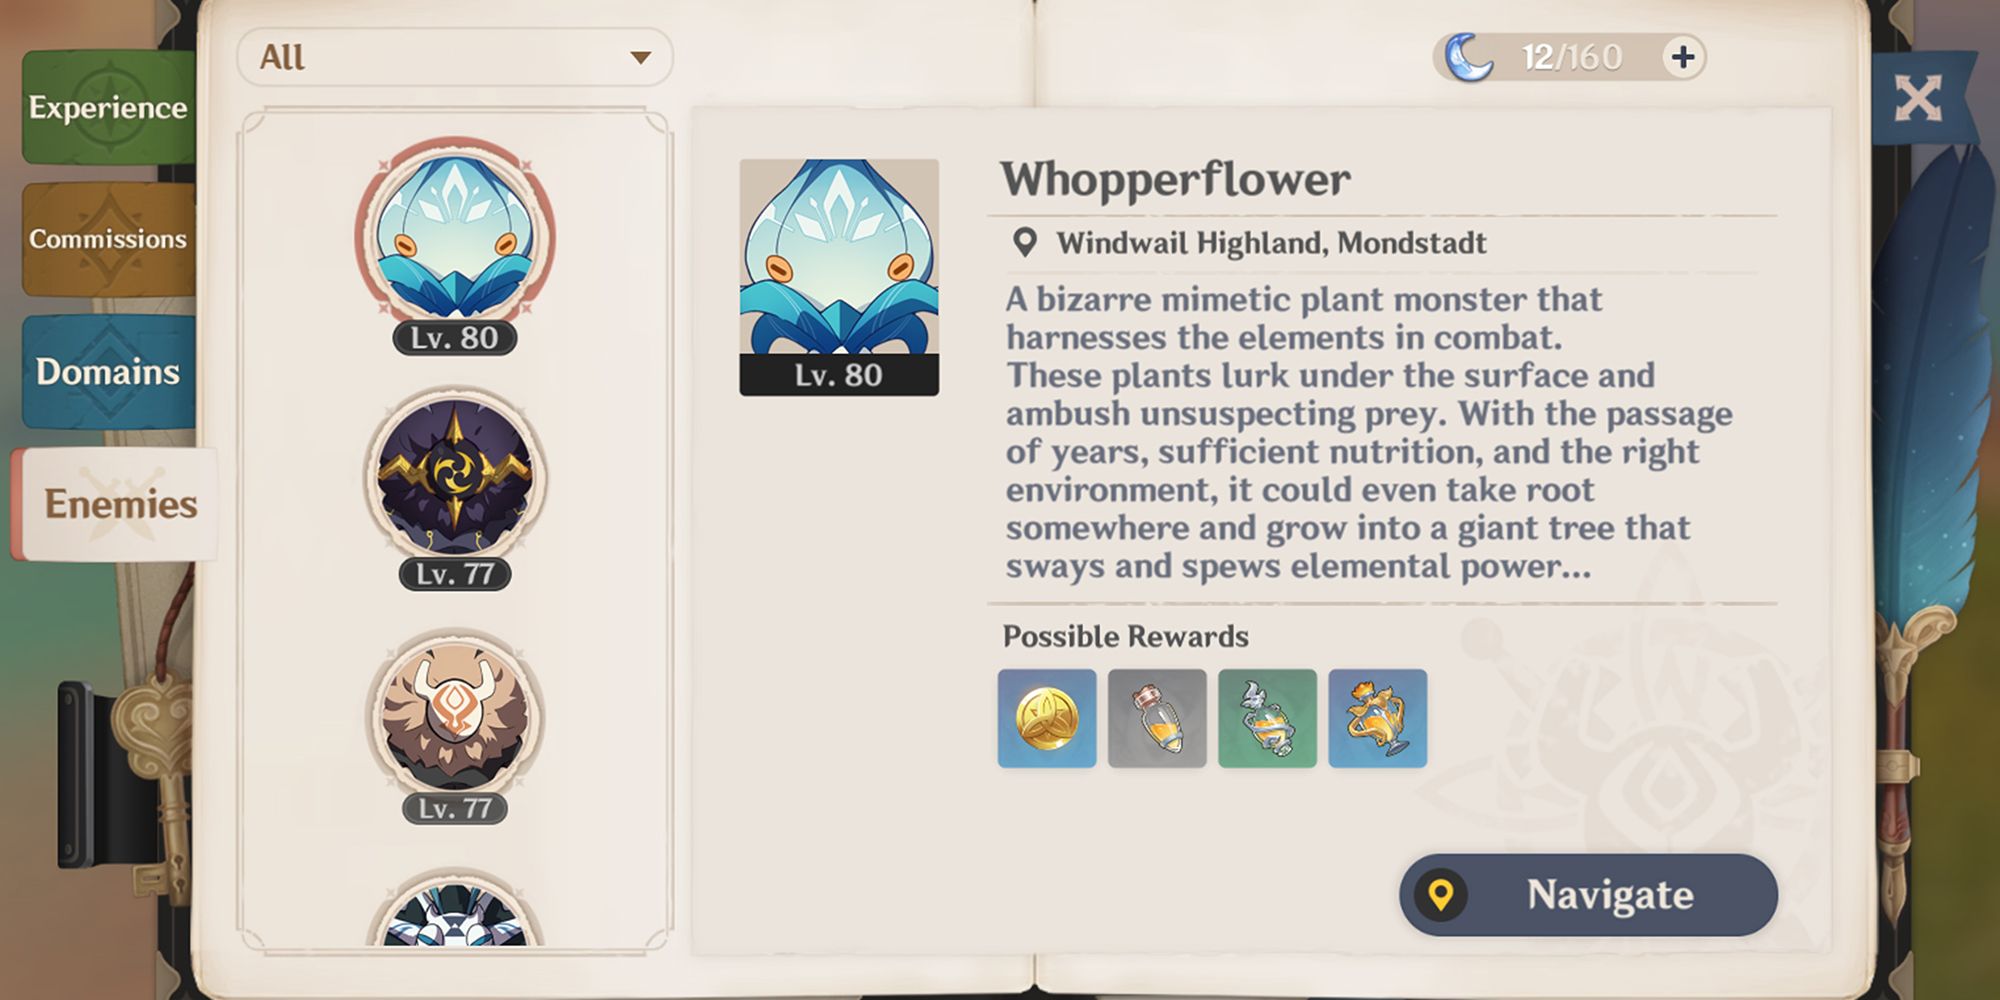 whopperflower page in guidebook